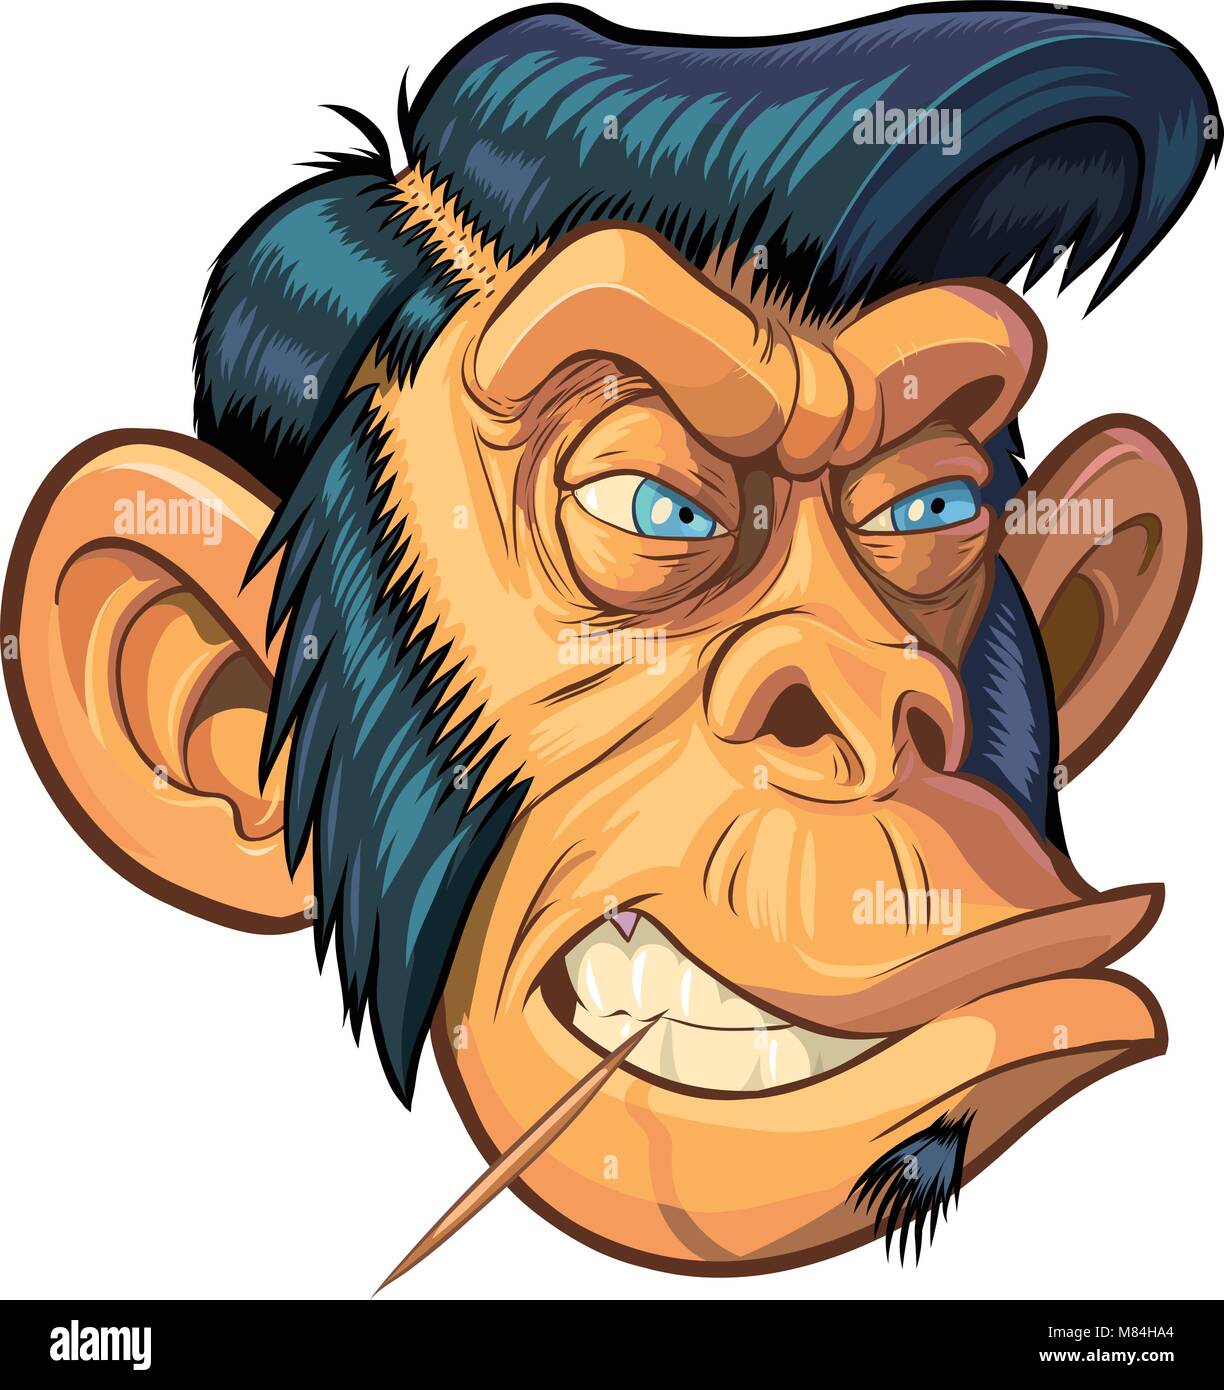 Mono verde personaje de dibujos animados estilo nft simio ilustración